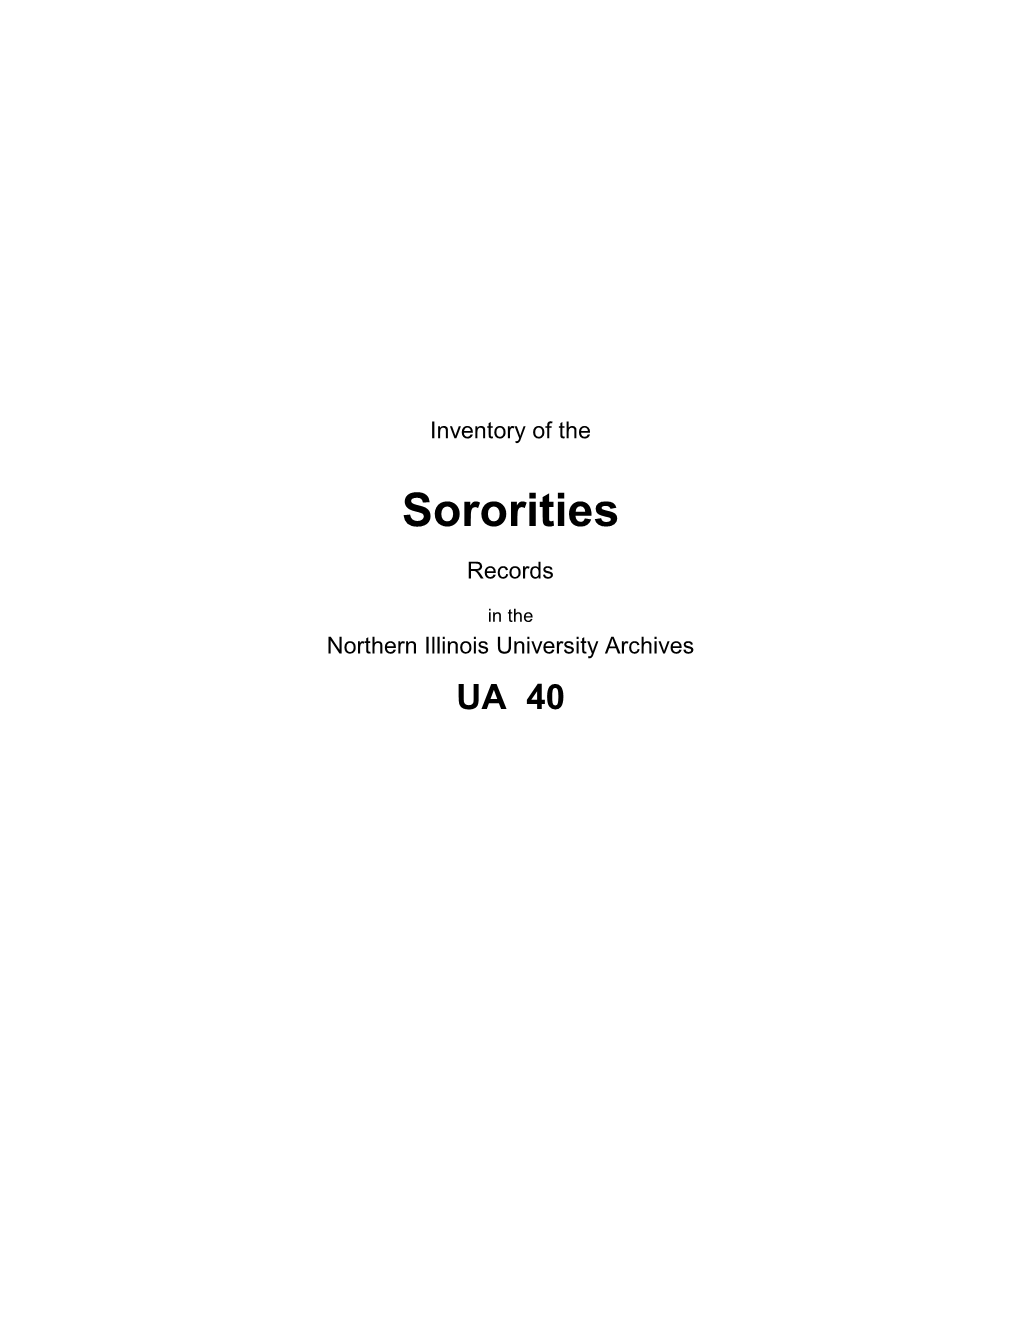 Sororities, 1952+